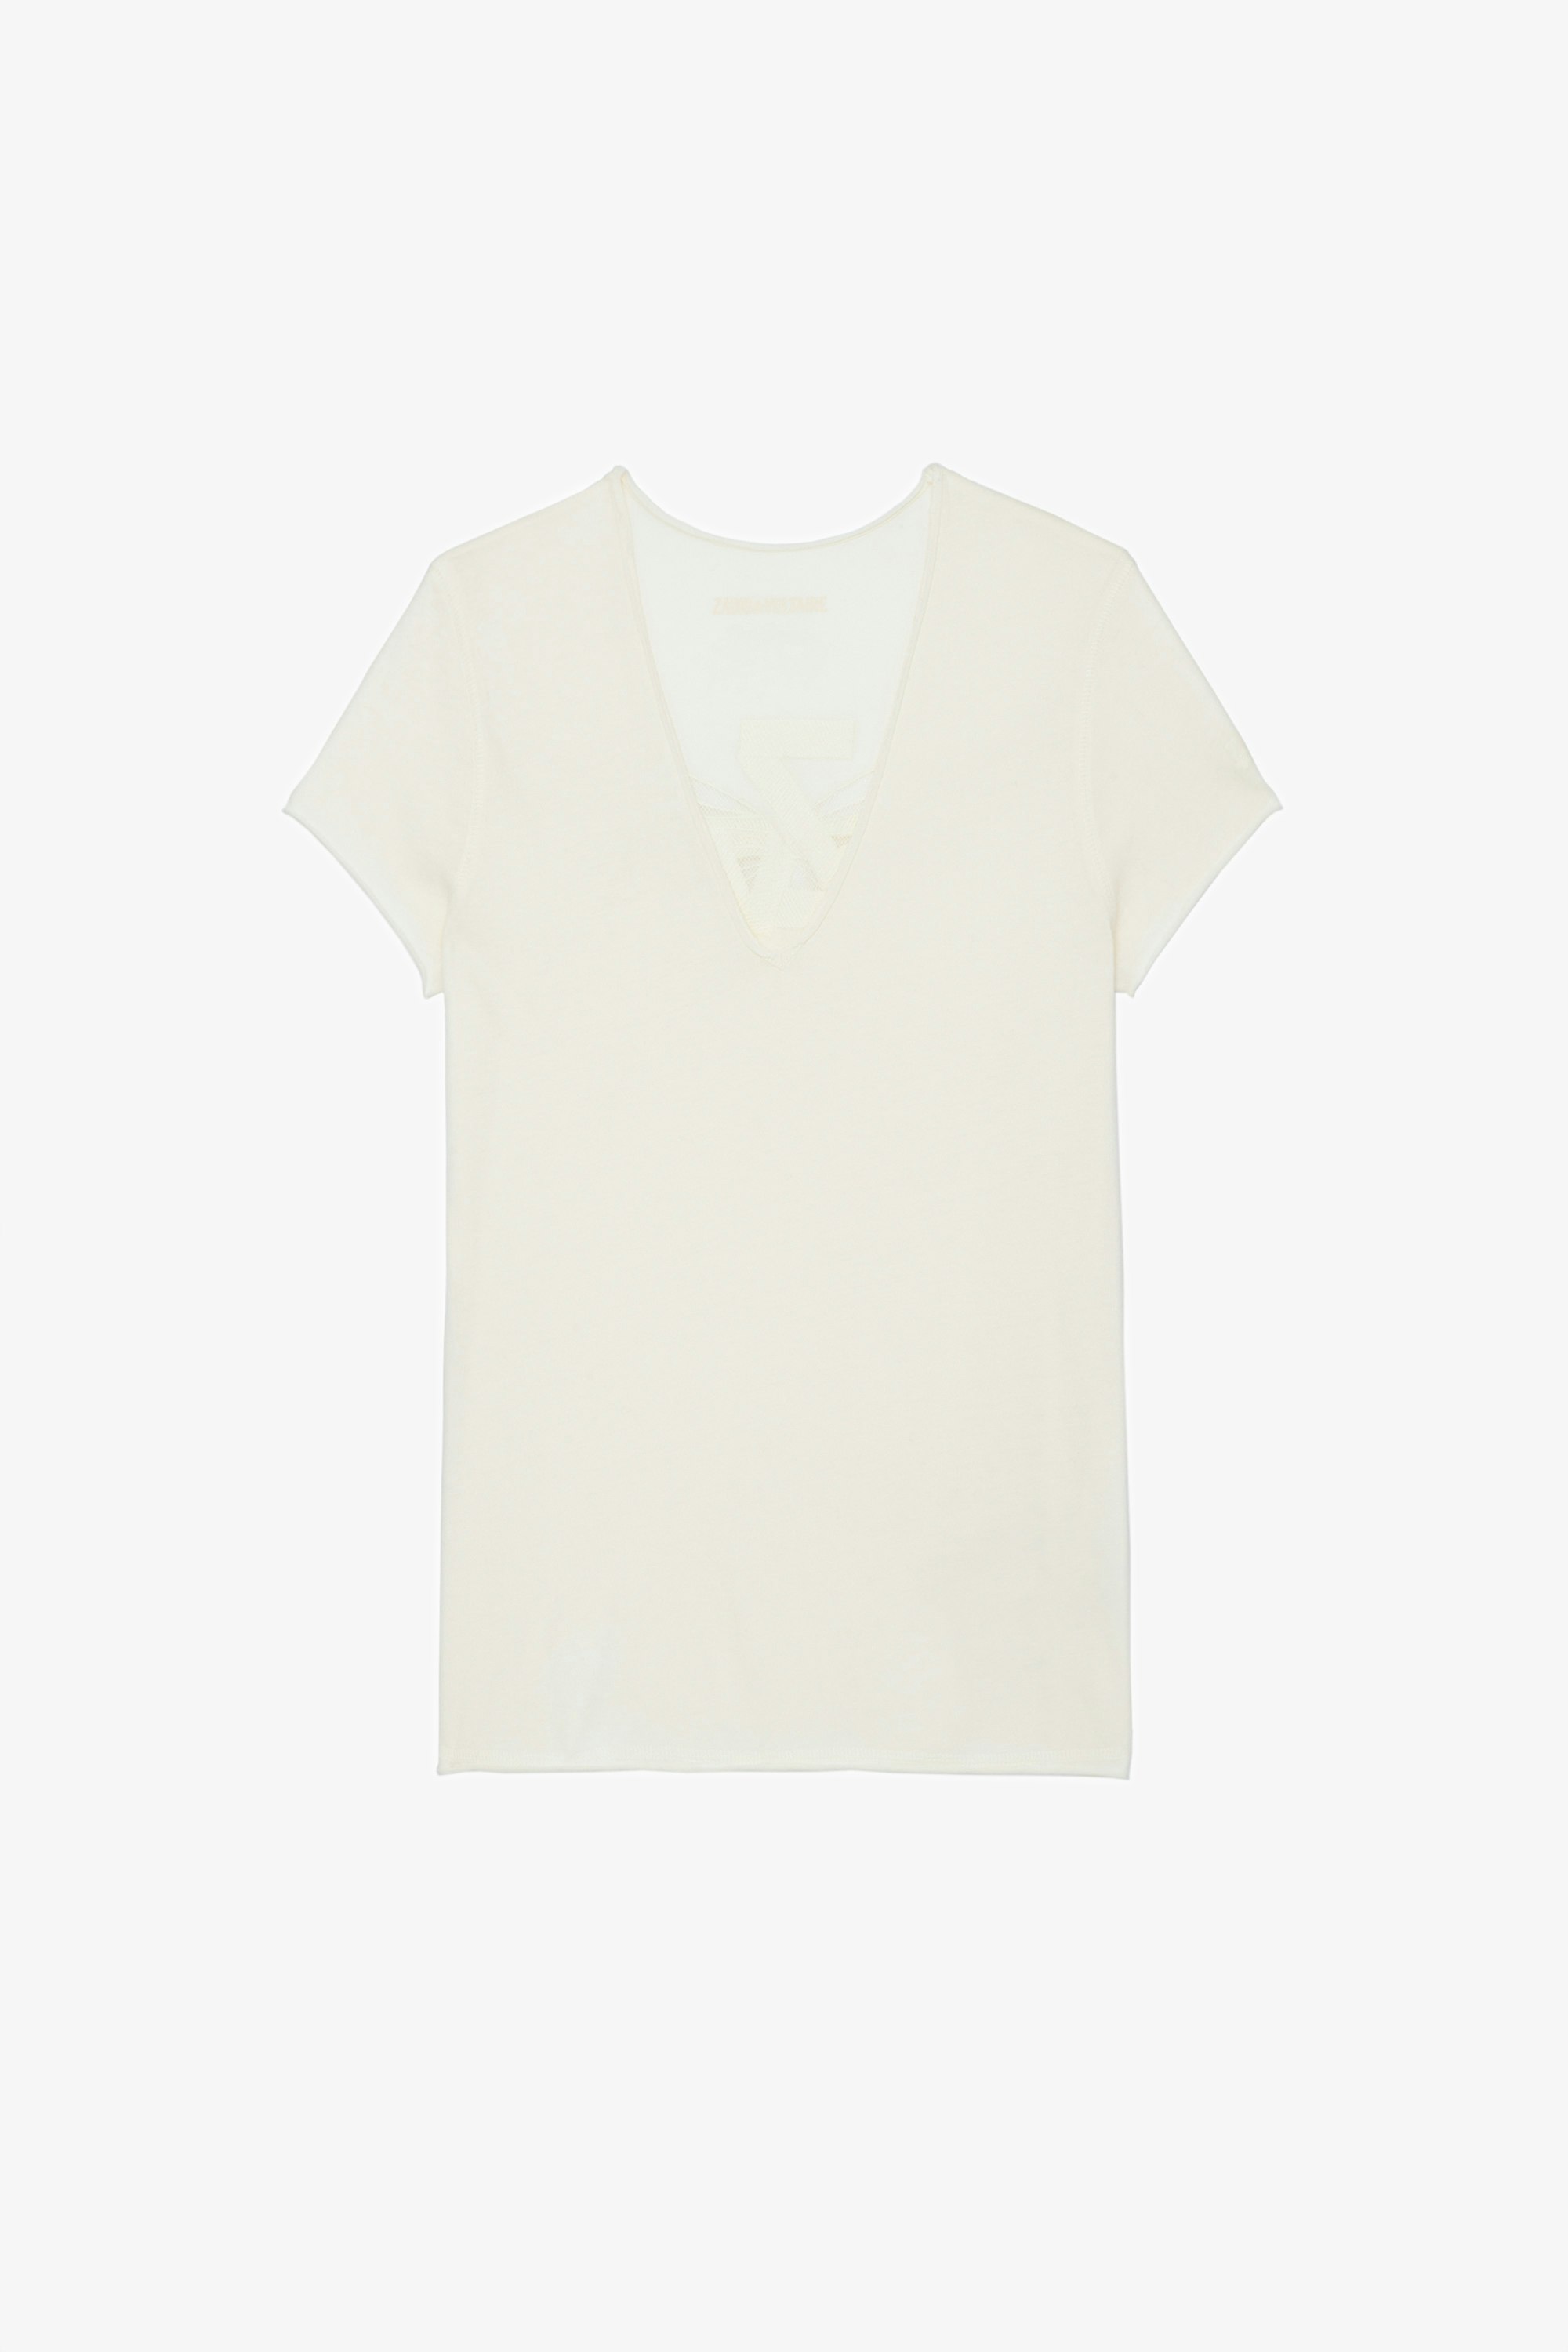 Story Fishnet ZV Wings Ｔシャツ Women’s beige short-sleeved T-shirt with ZV wings motif on the back